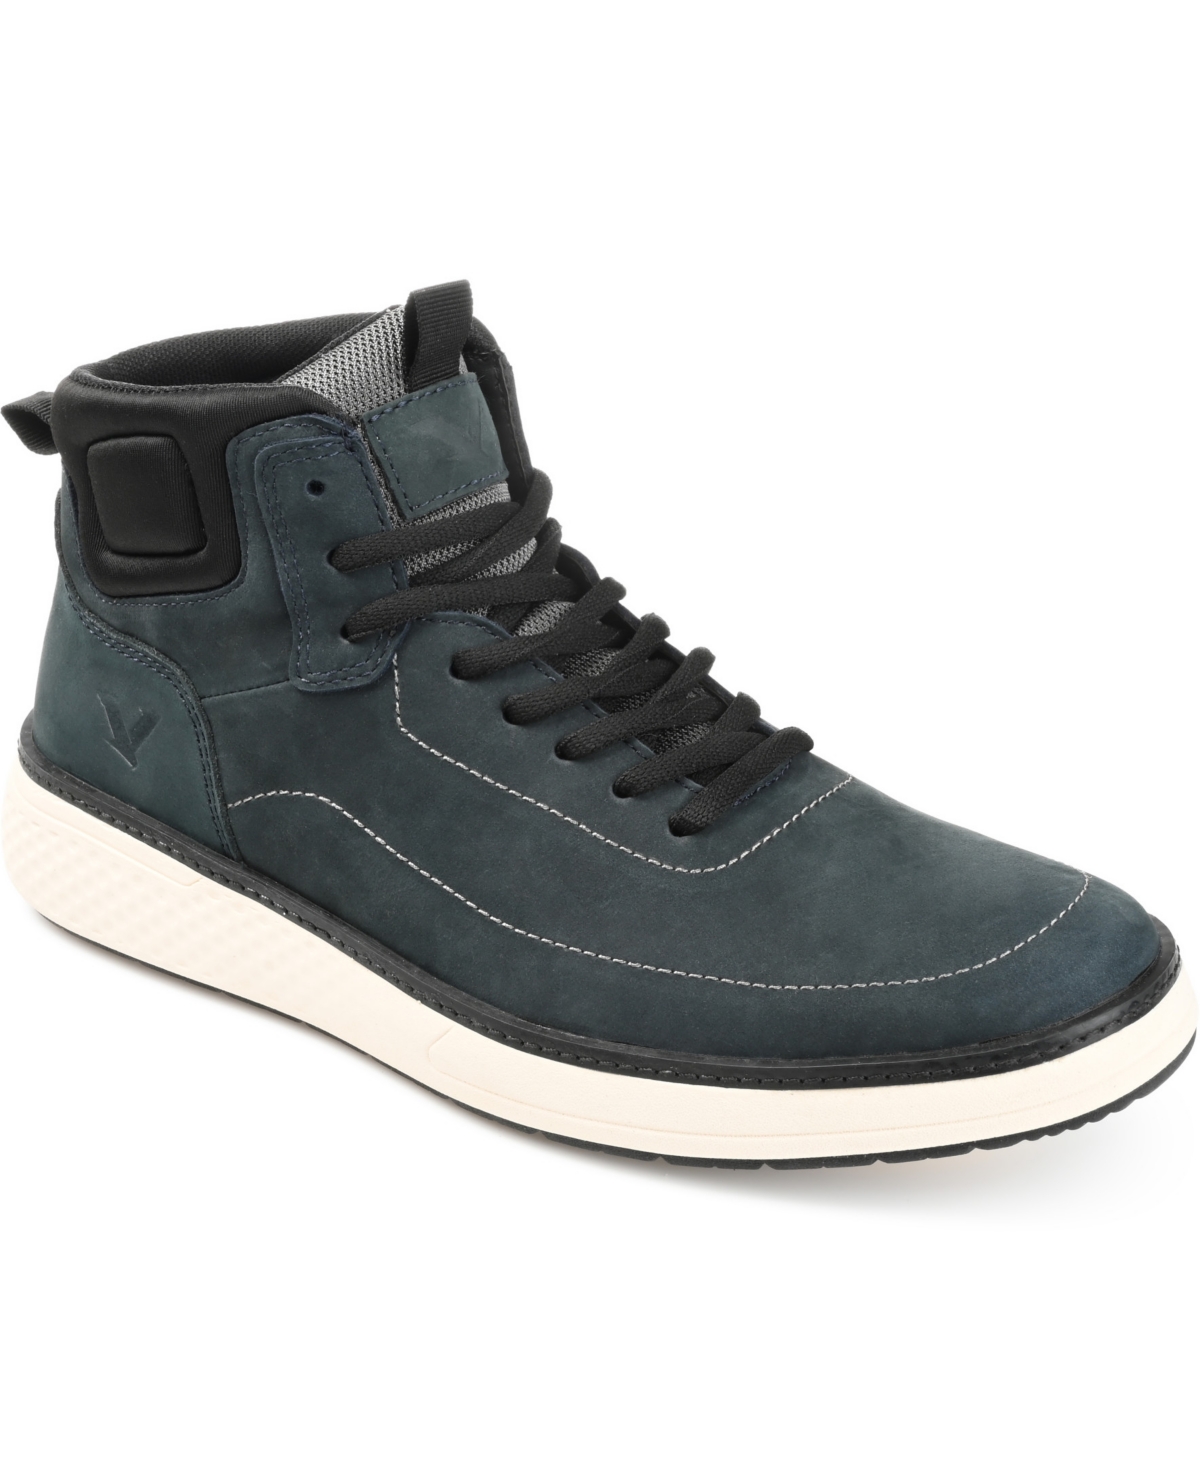 Men's Roam High Top Sneaker Boots - Gray